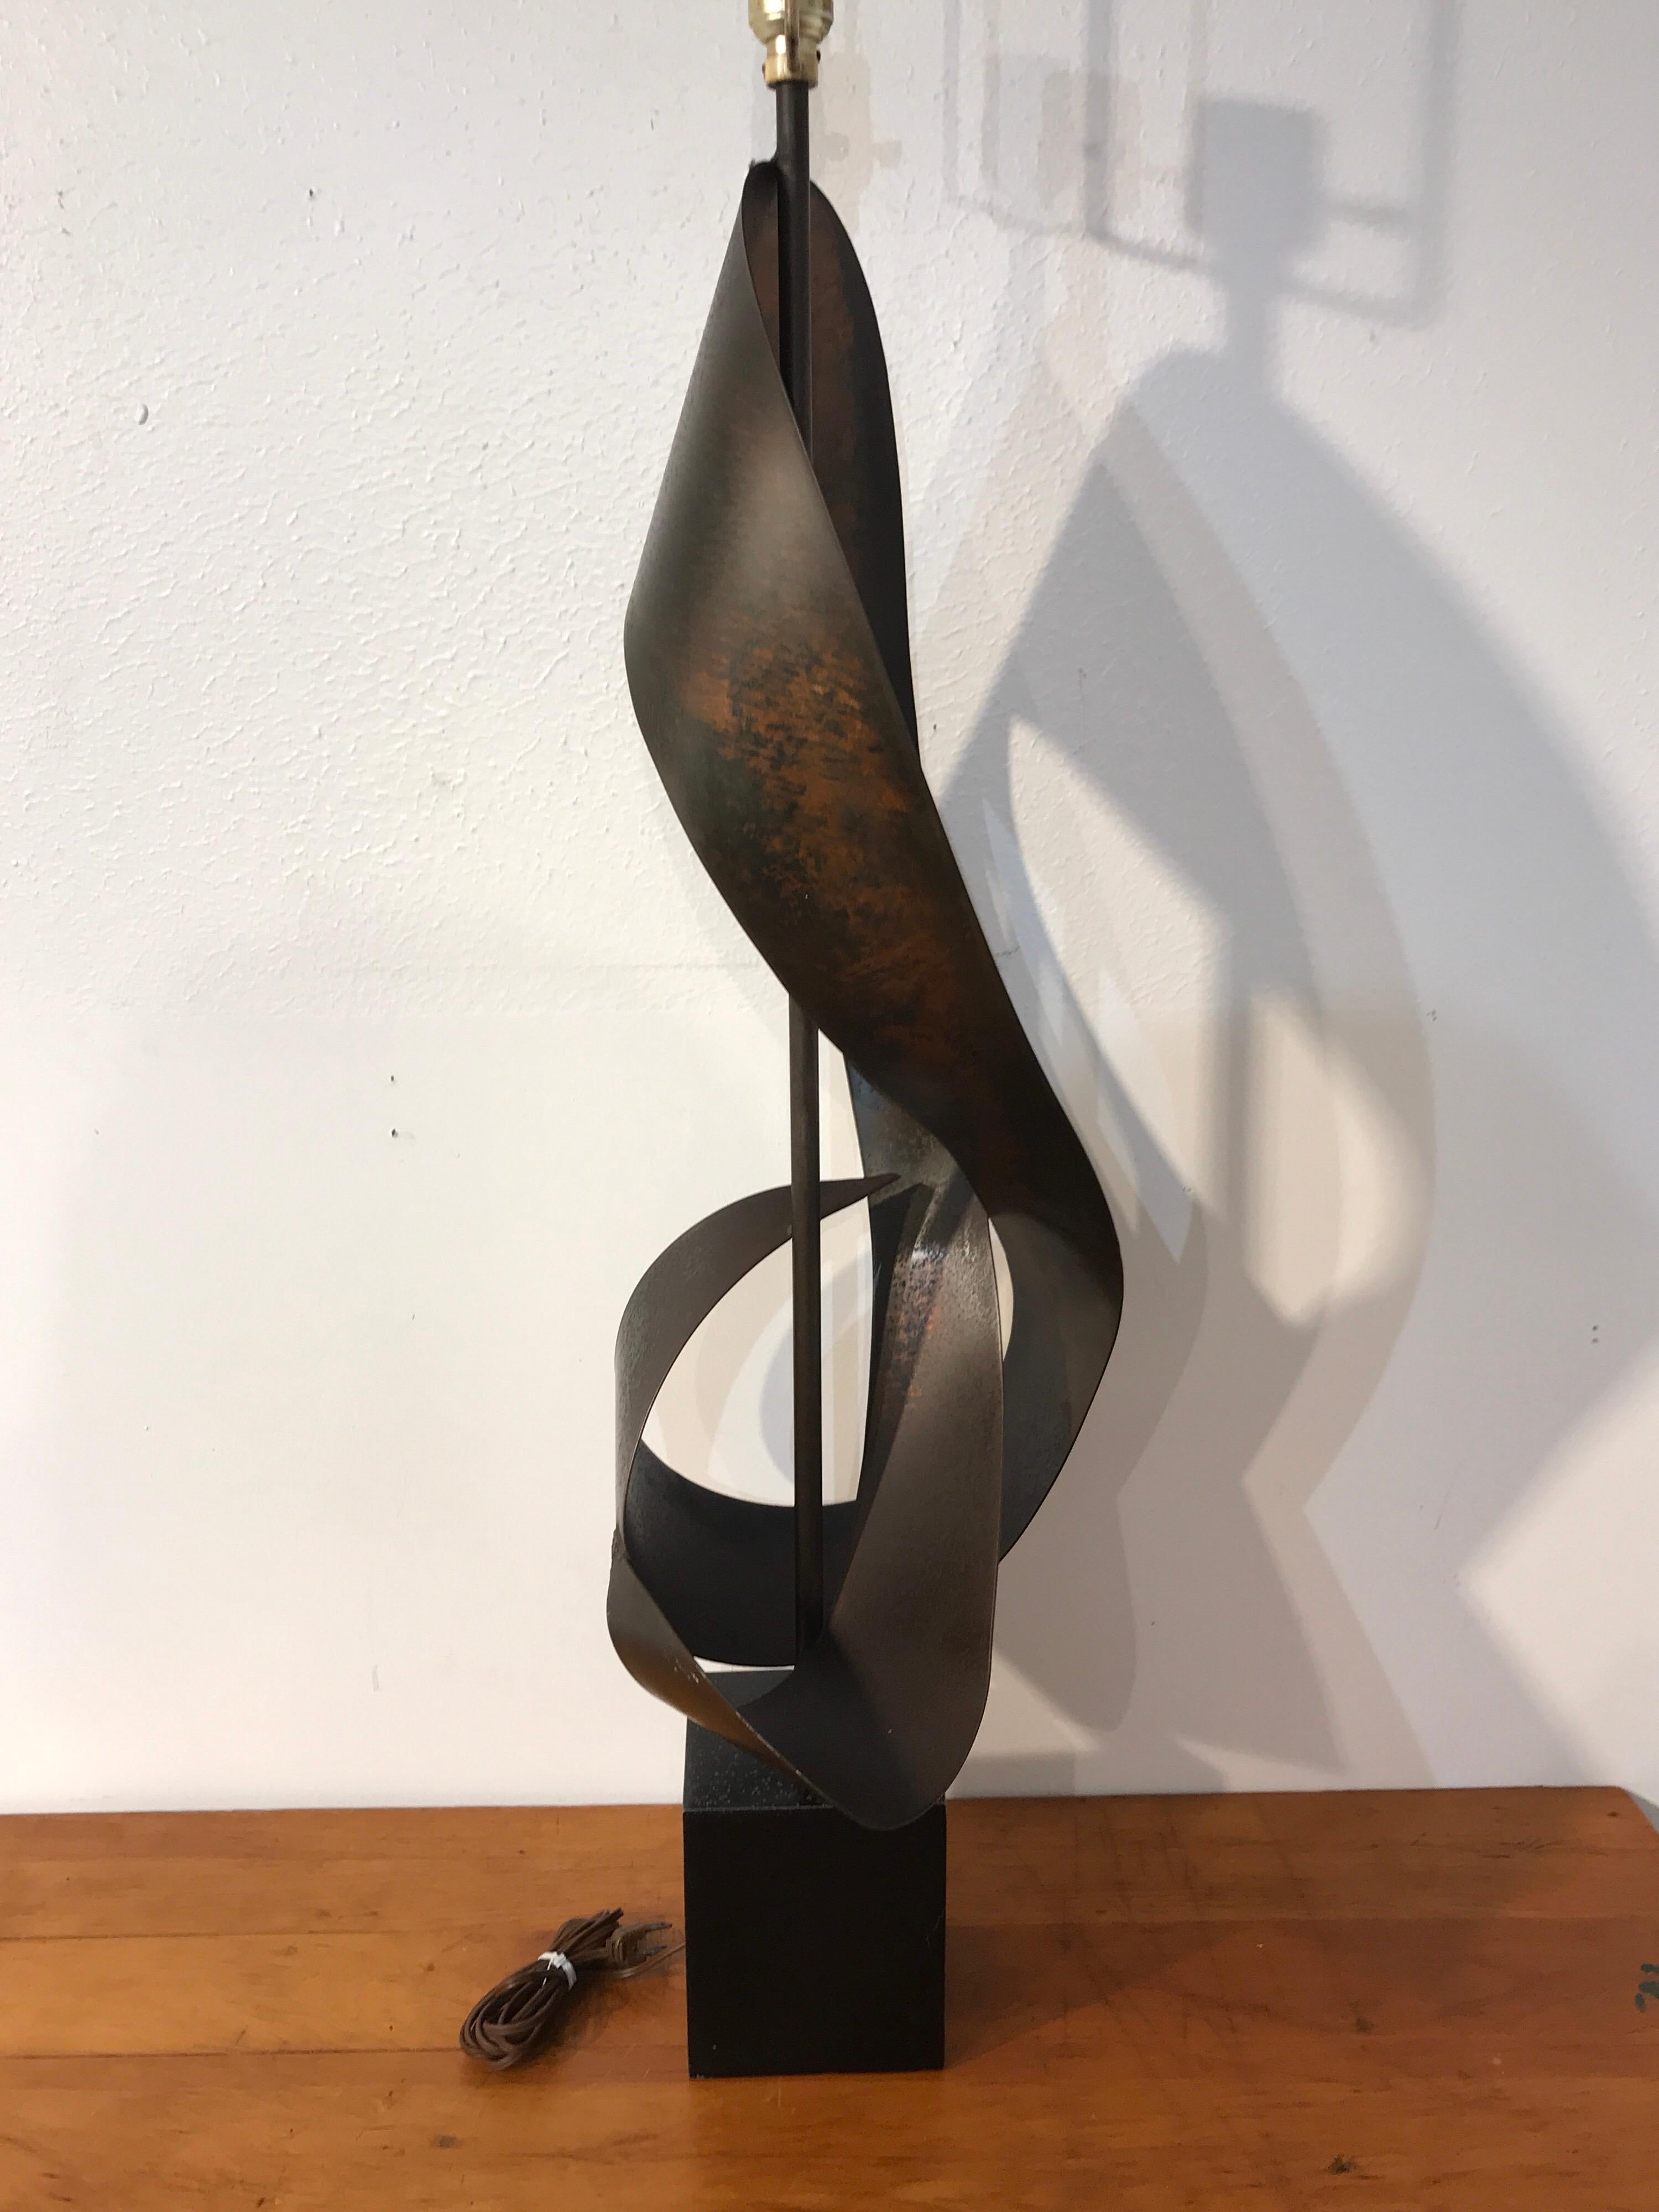 Richard Barr for Laurel, iconic sculptural table lamp, sculpture alone measures 35